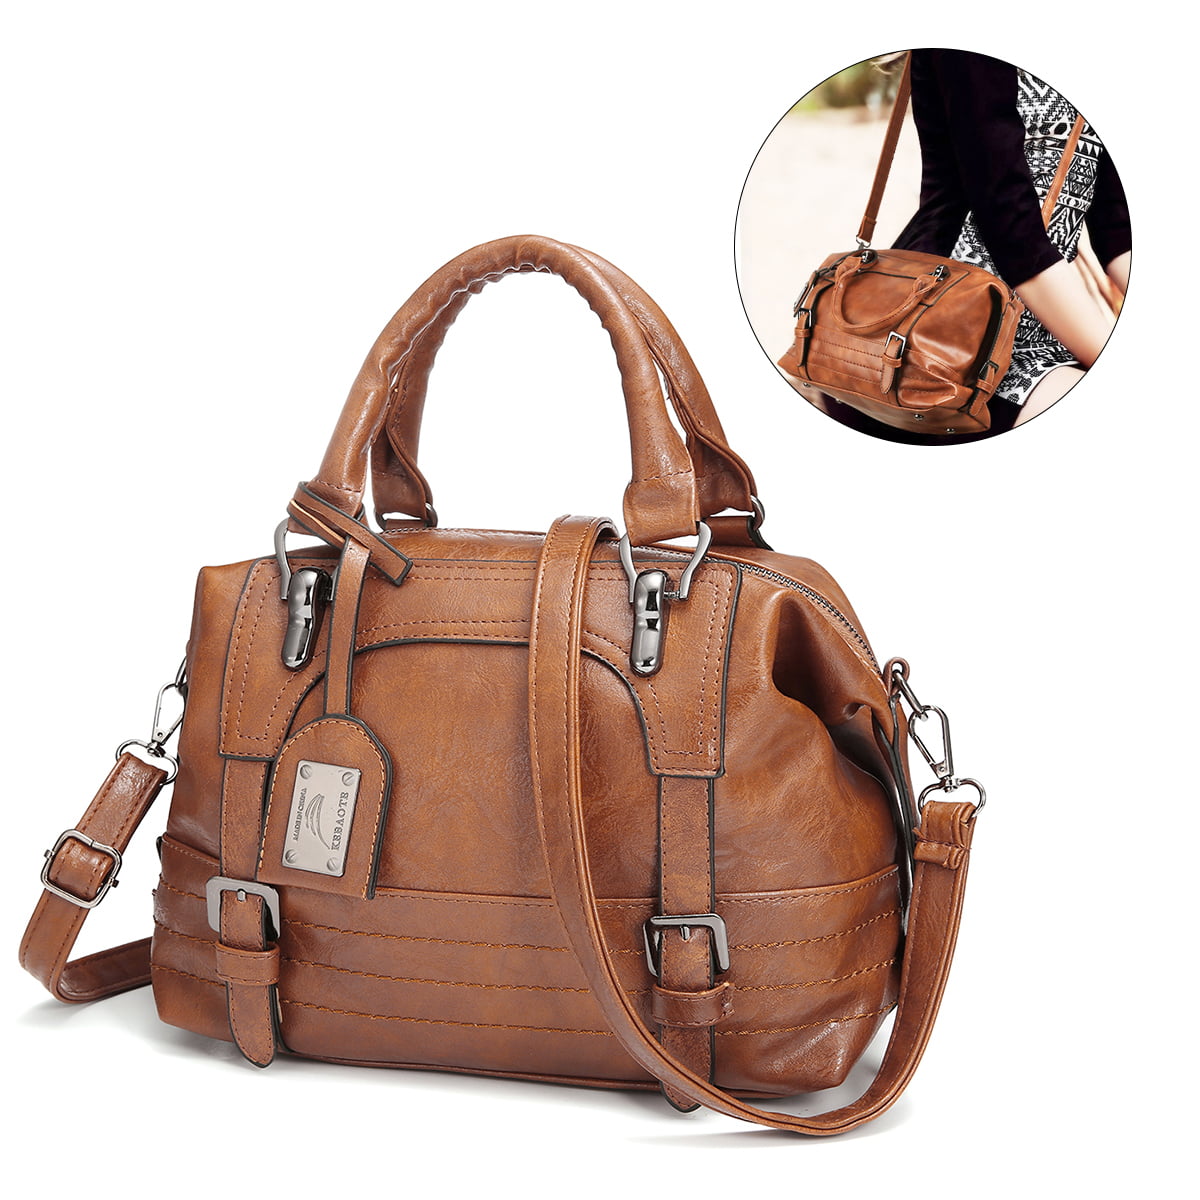 2021 Women Lady PU Leather Handbag Tote Messenger CrossBody Shoulder Bag  Satchel Purse for Ladies Girls Shopping Working - Walmart.com